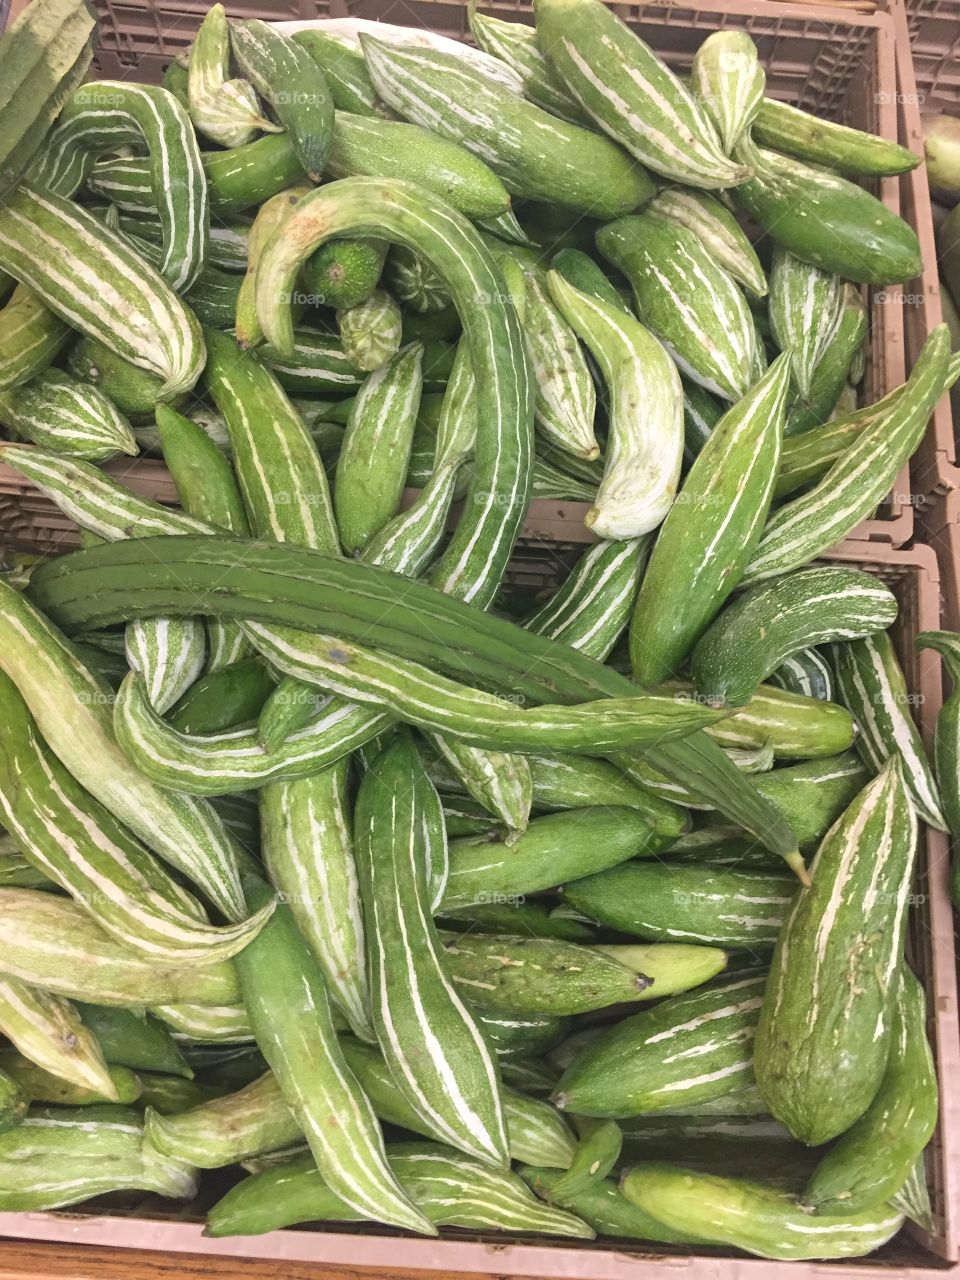 Cucumbers at an international market in Columbus Ohio